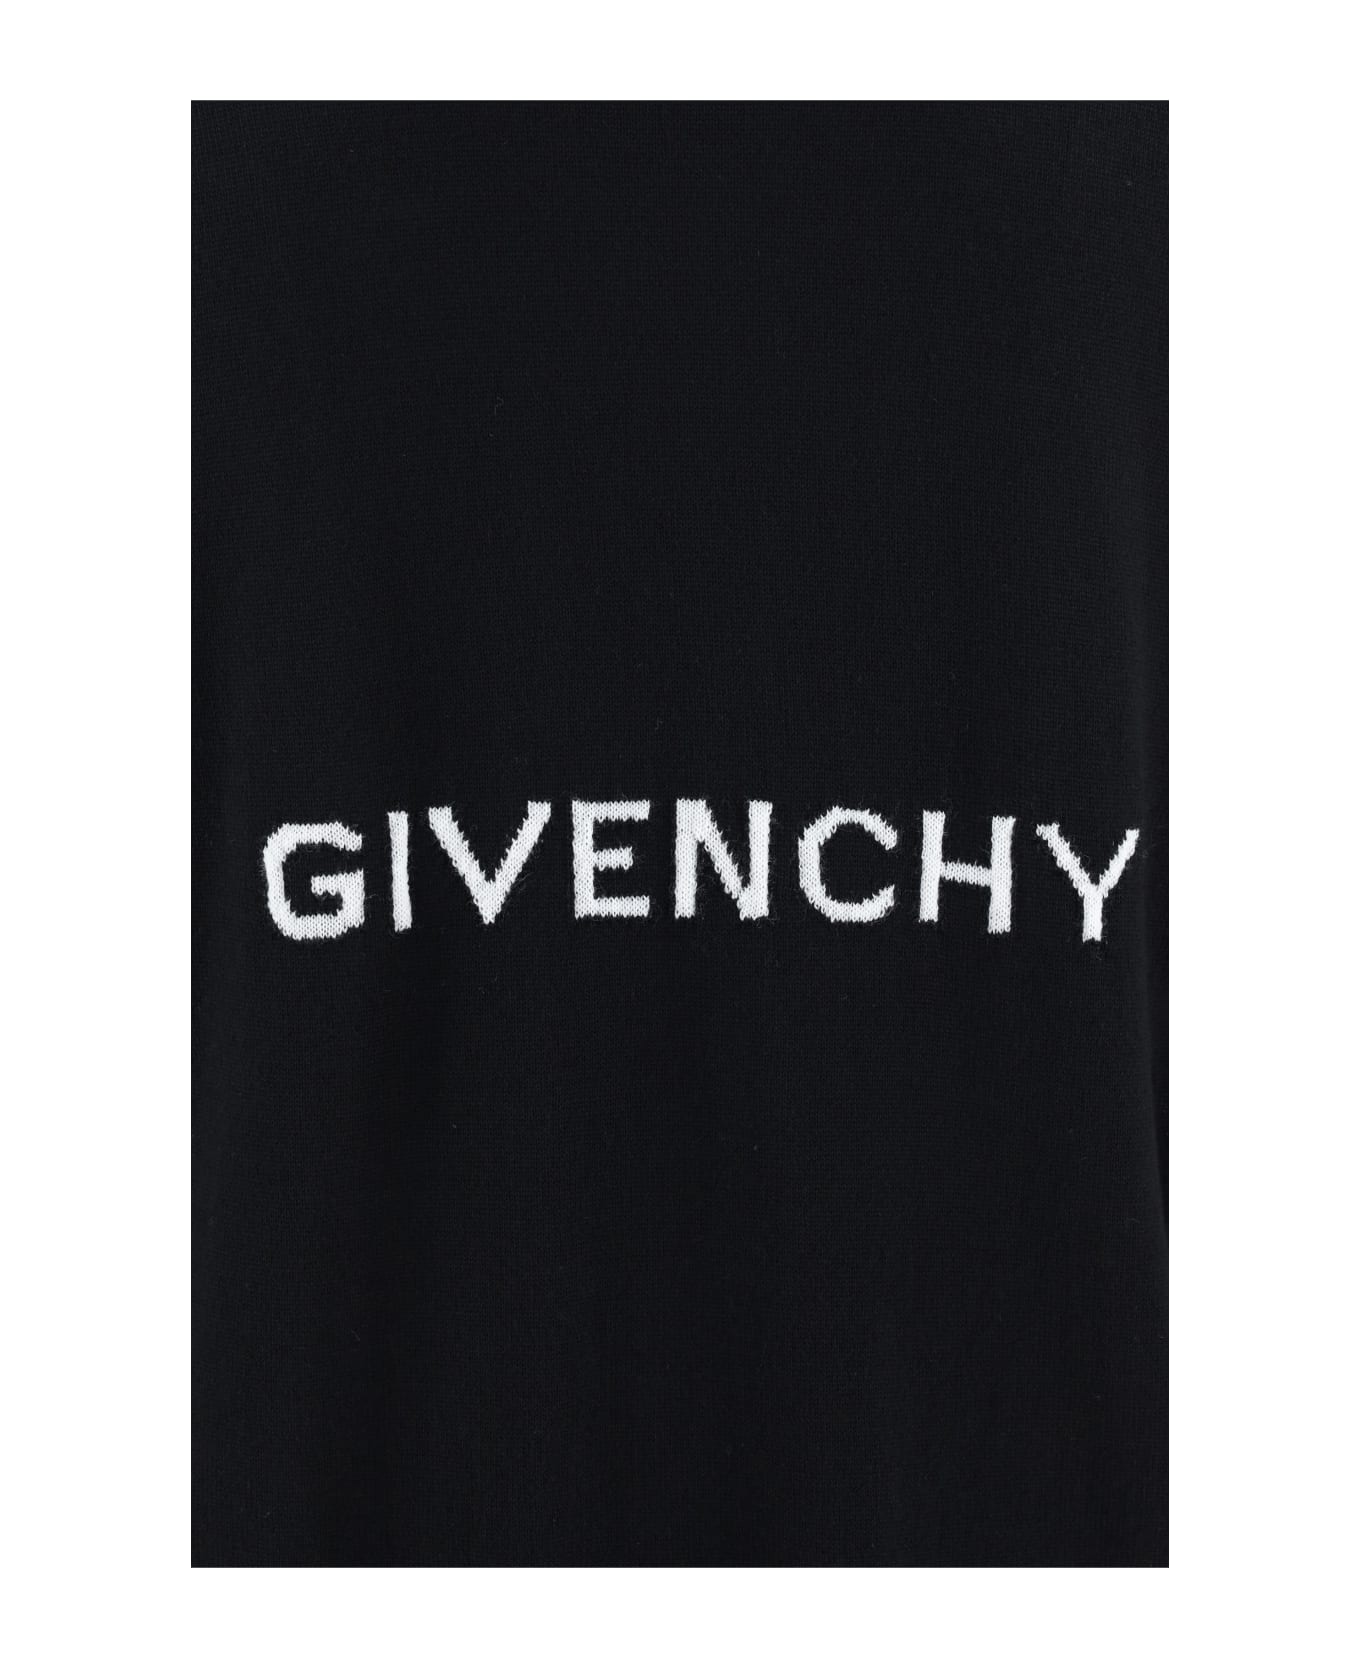 Givenchy Wool Cardigan - Black カーディガン